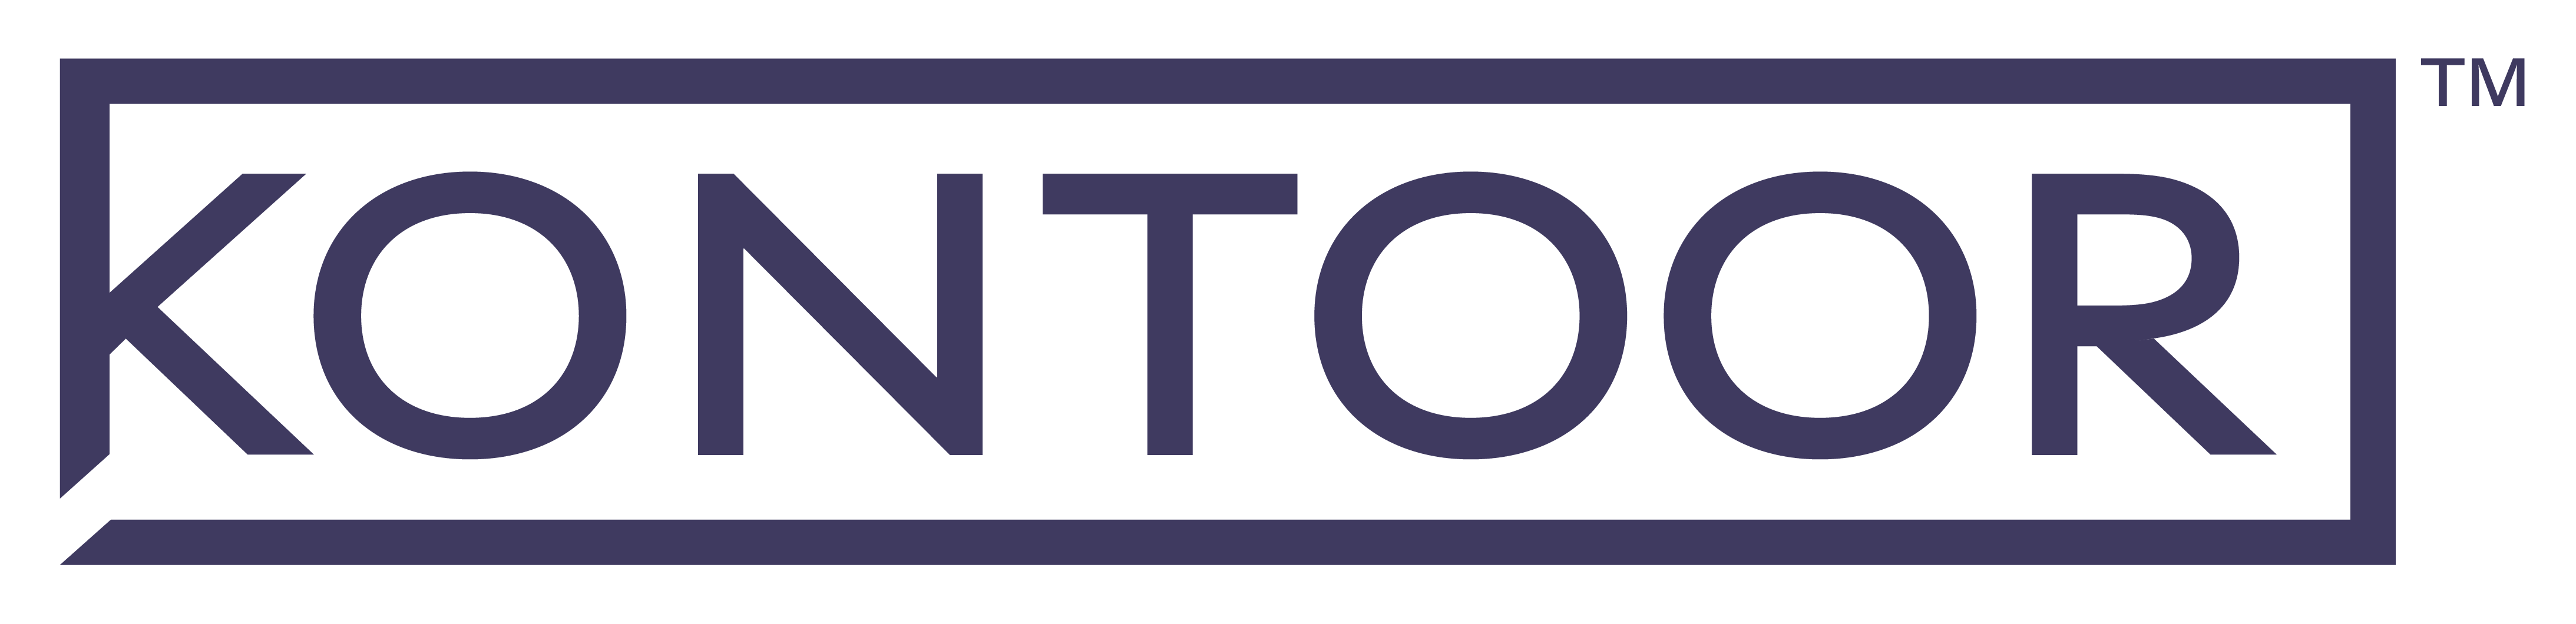 Kontoor_Brand_Logo